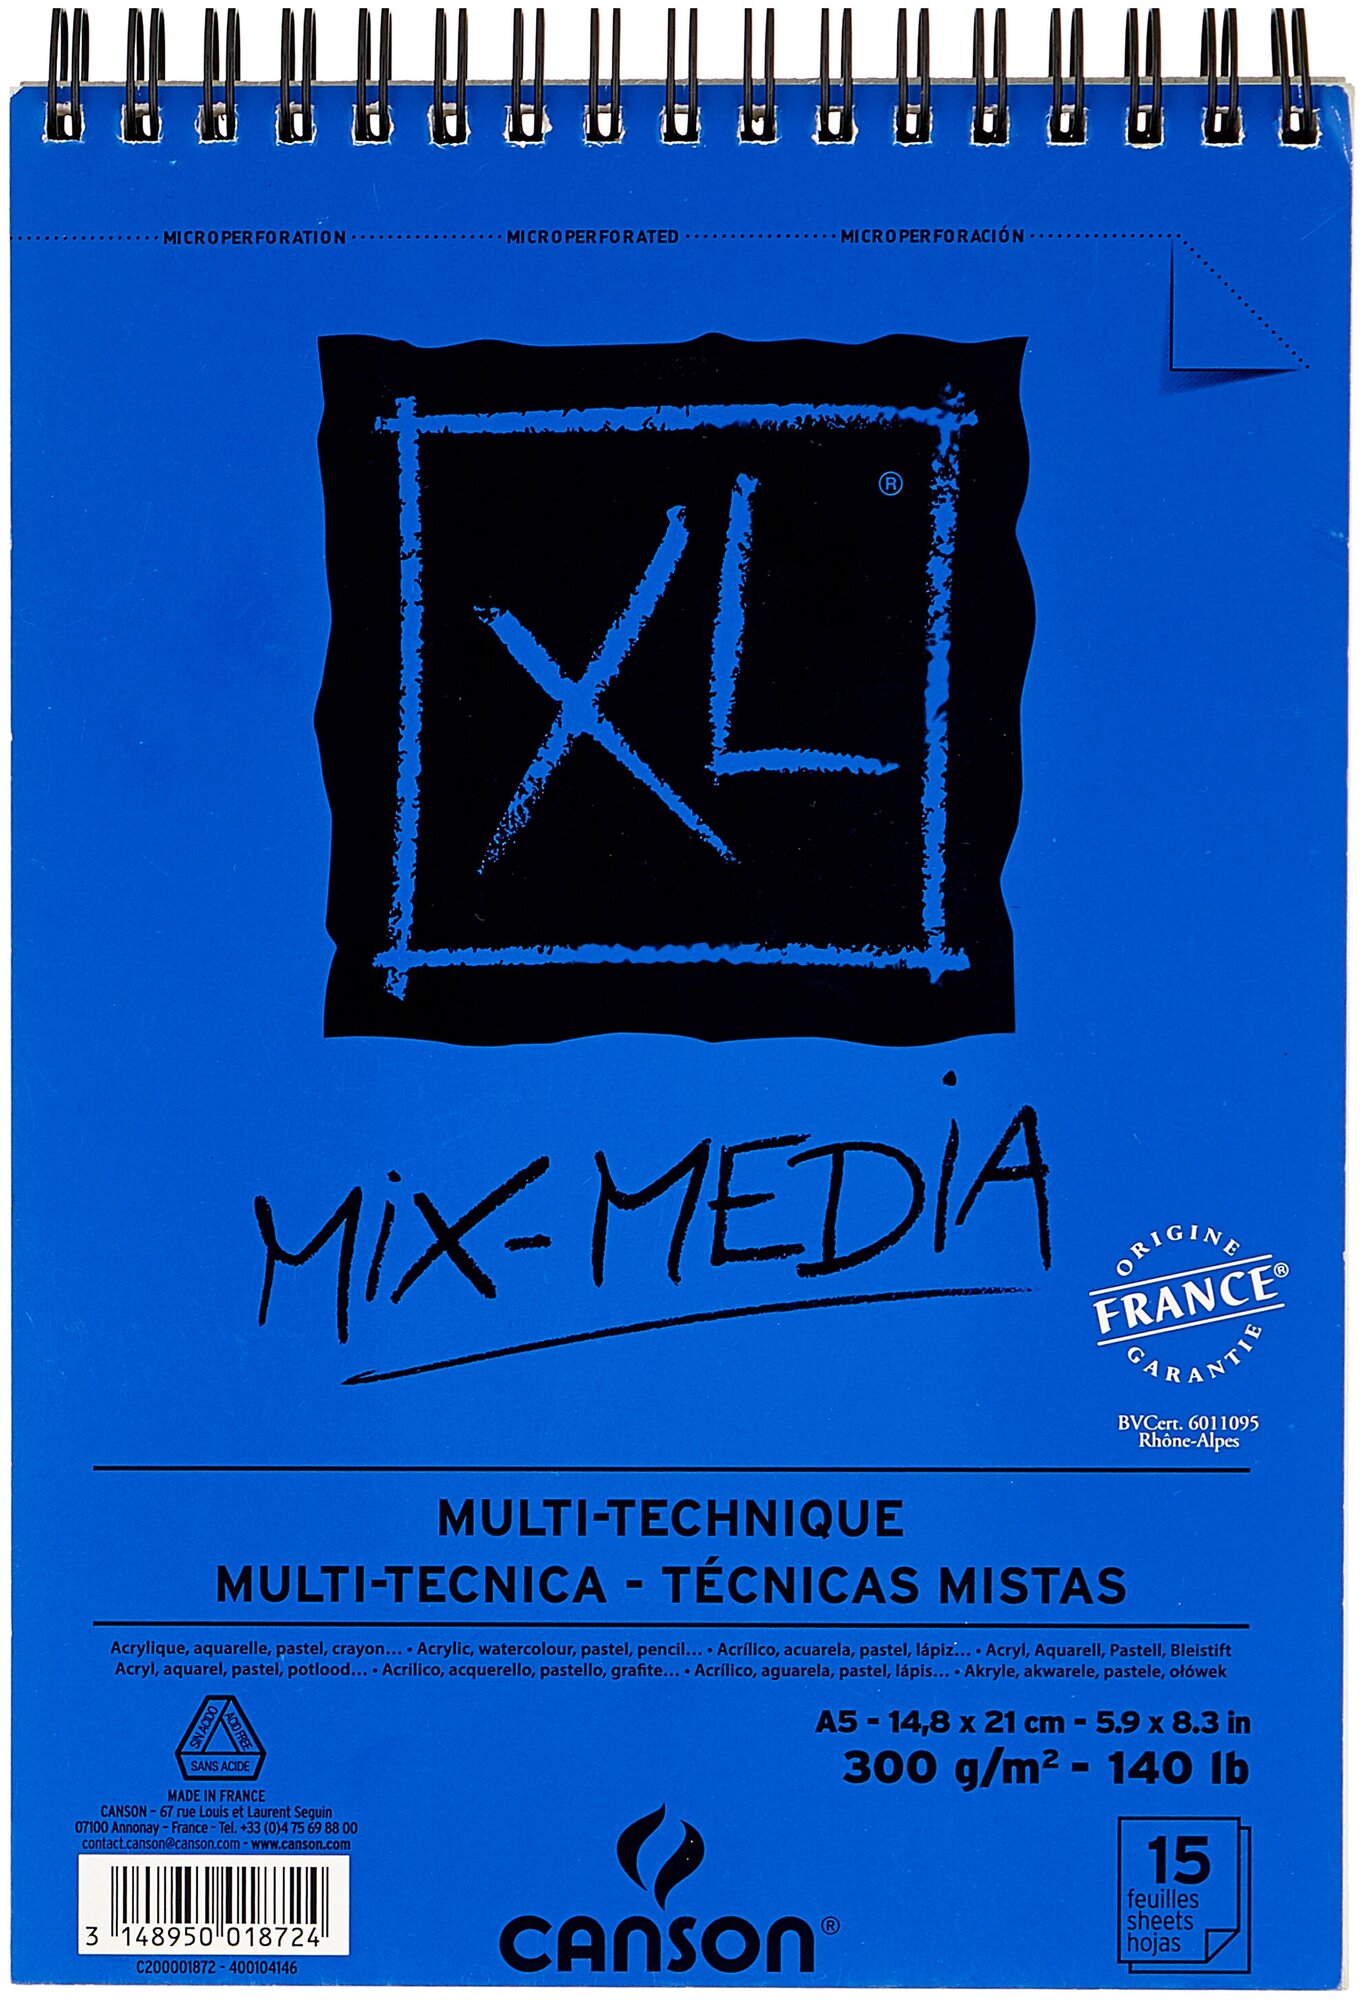 Canson Альбом XL Mix-Media 300гр/м, Среднее зерно, 14,8х21см, 15л